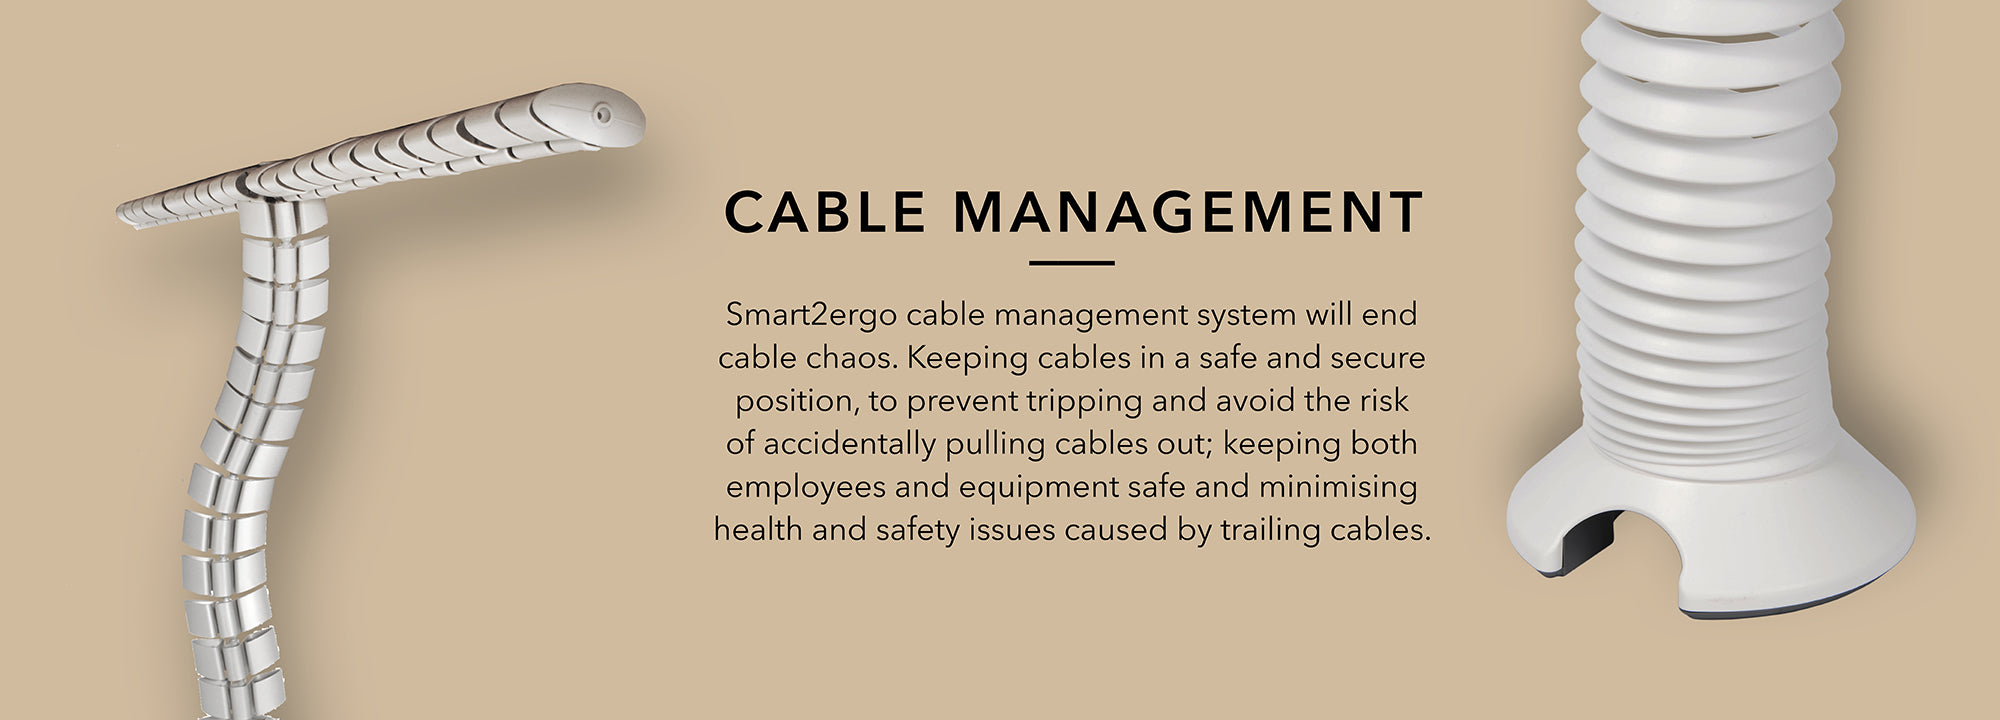 Smart2ergo - Cable management system